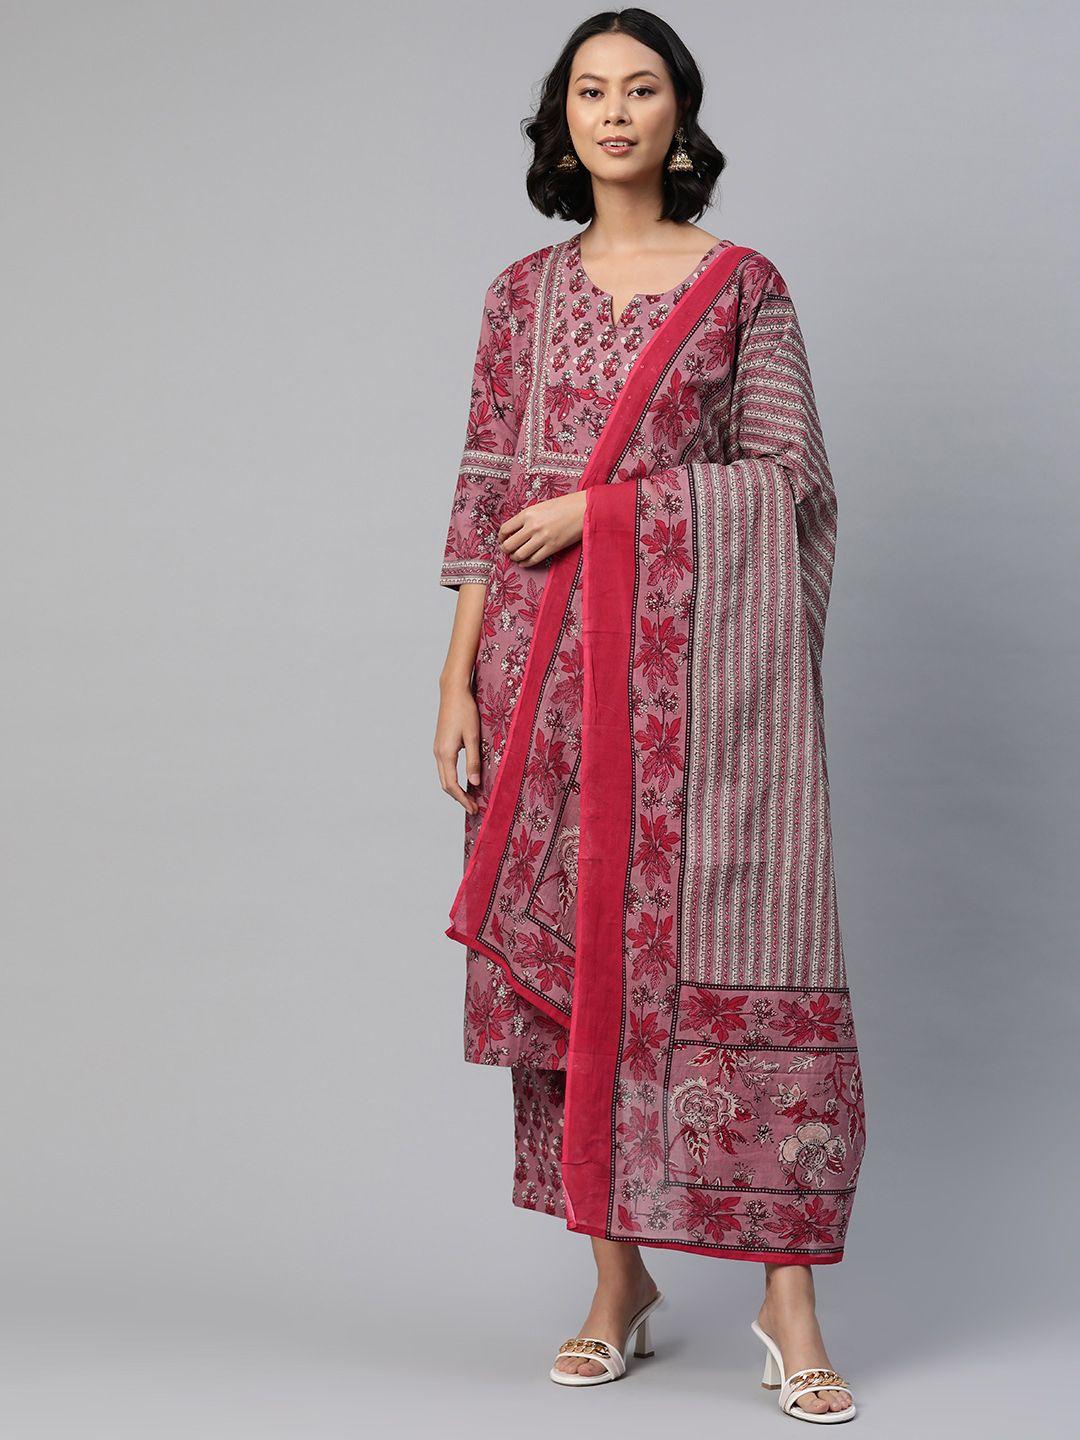 readiprint fashions women floral printed beads and stones cotton kurta set